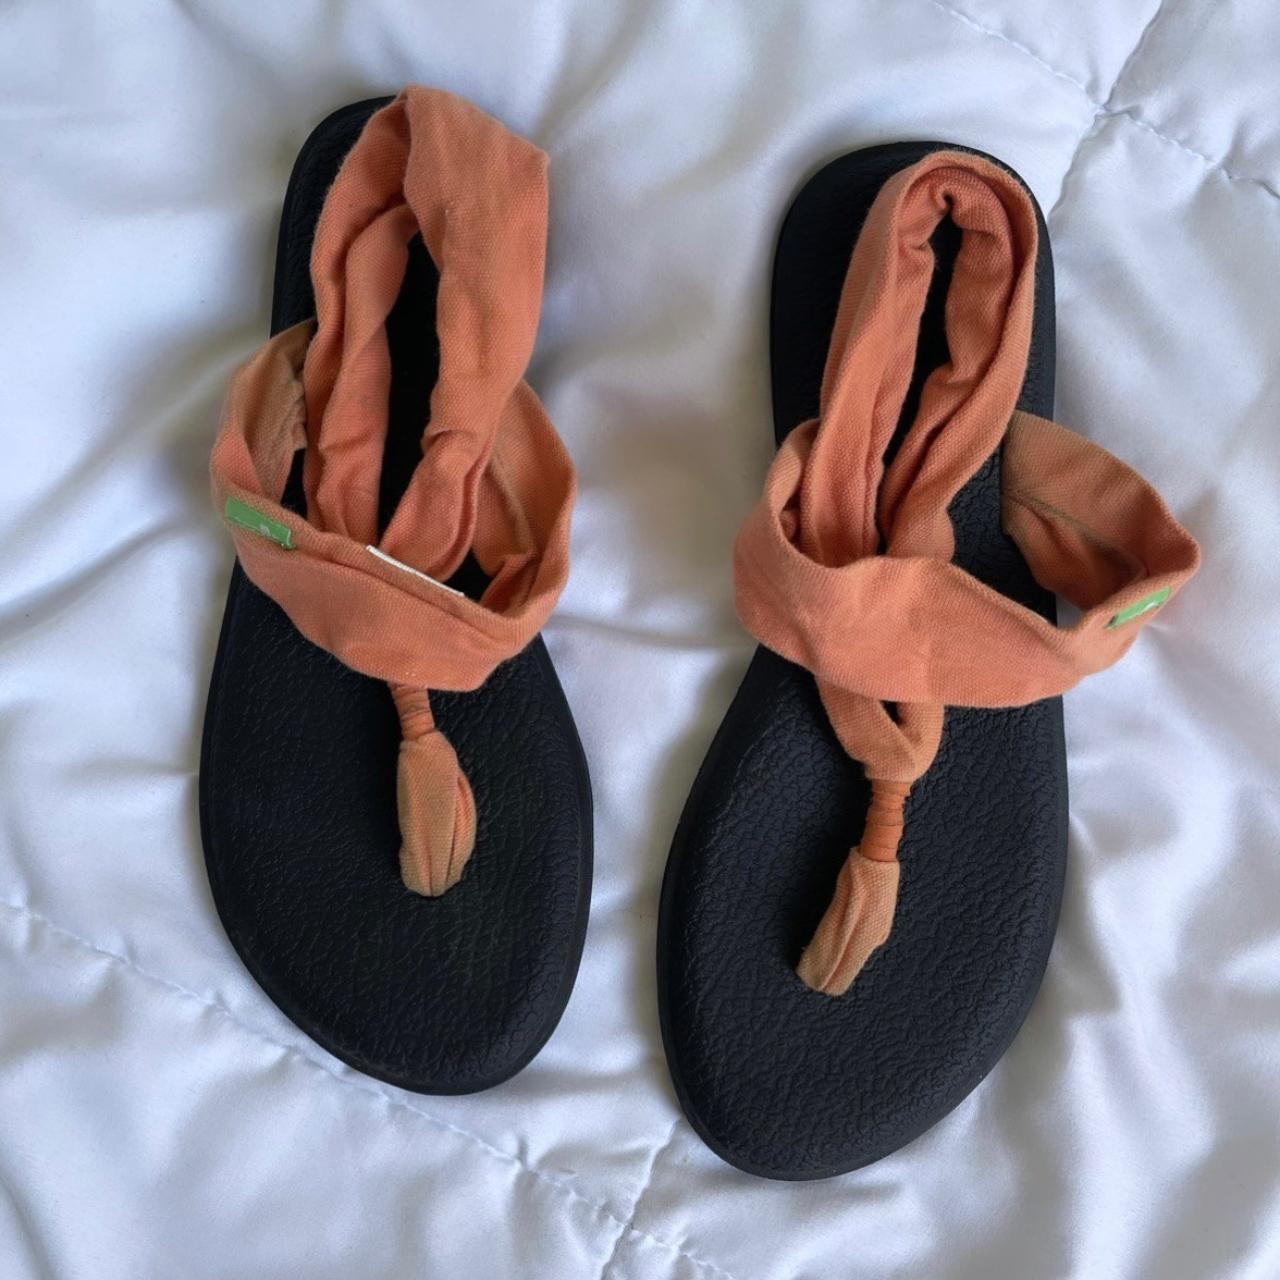 New Sanuk Yoga Sling Leopard sandals, size 6, new - Depop